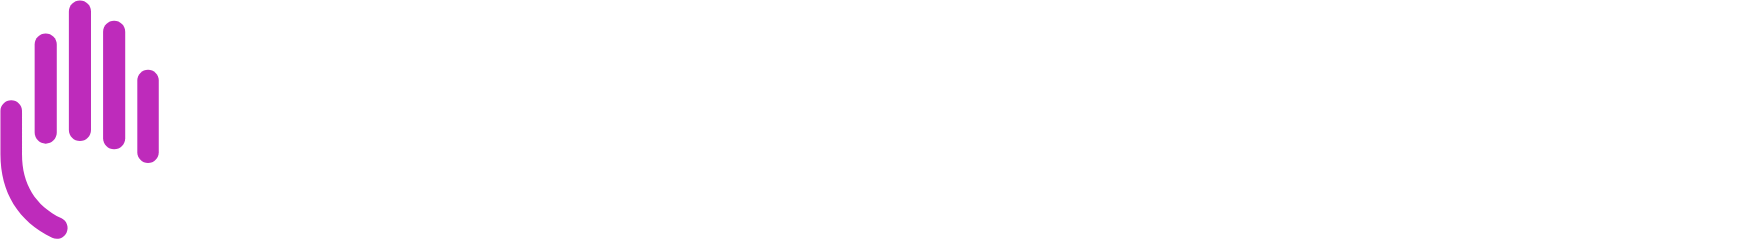 Bristol-Myers Squibb logo large for dark backgrounds (transparent PNG)